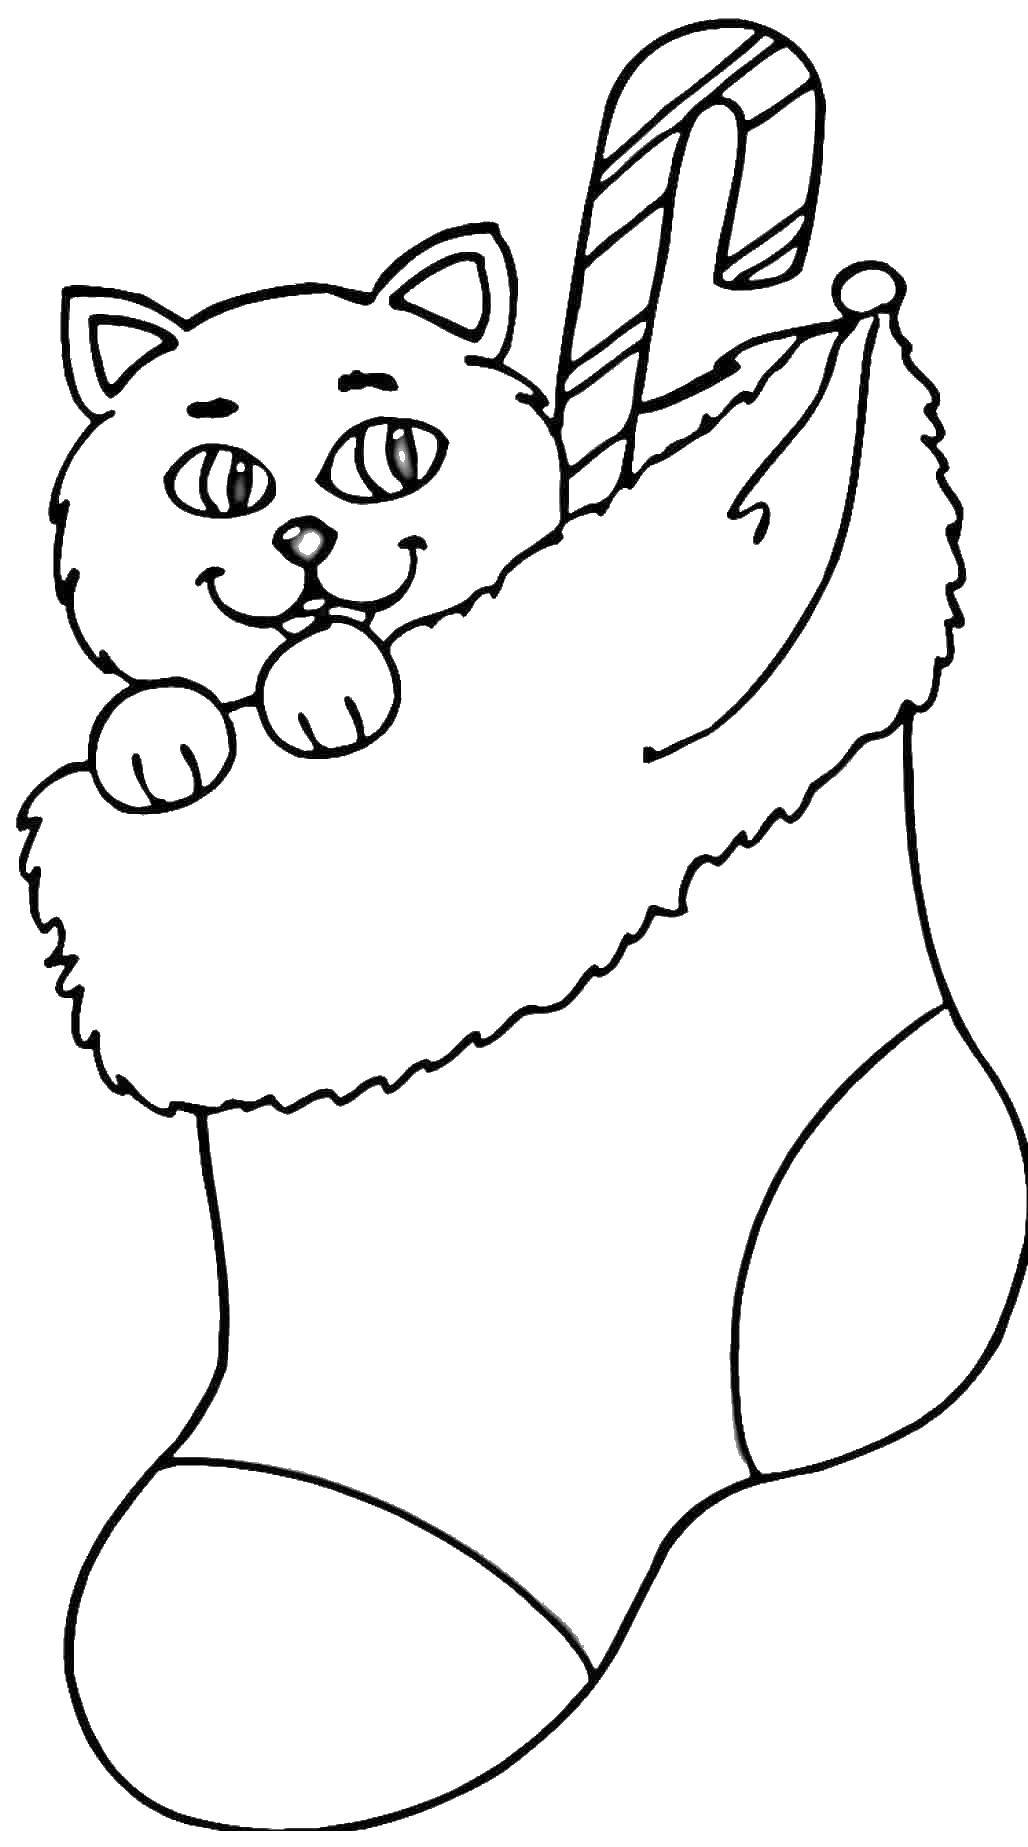 Название: Раскраска Котик в носочке. Категория: Рождество. Теги: рождество, носочек, котик.